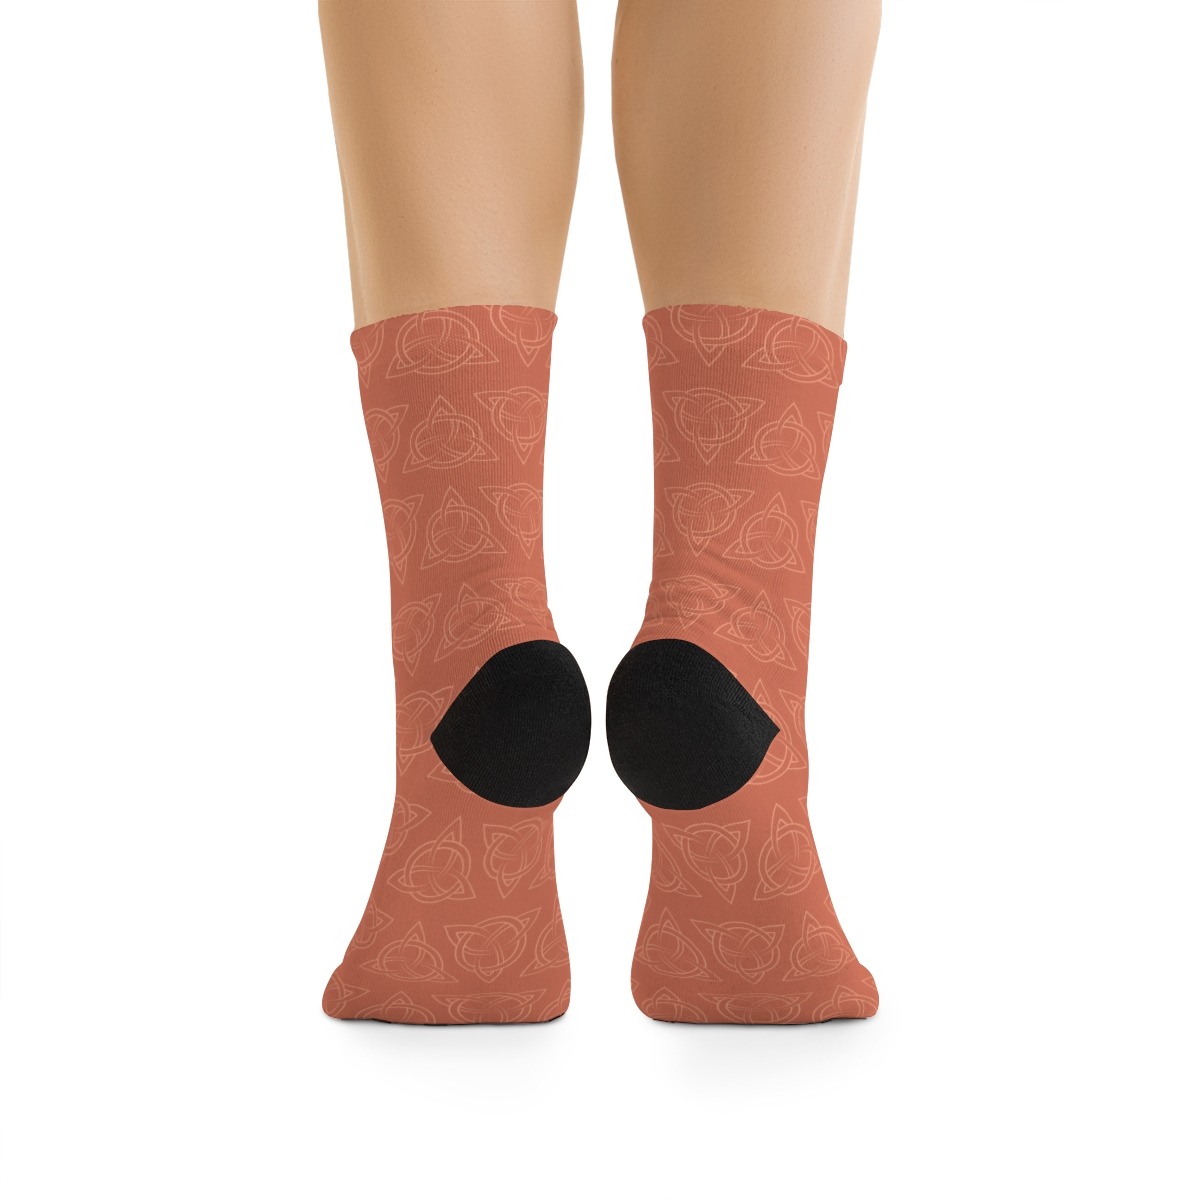 Persimmon Celtic Triquetra Socks